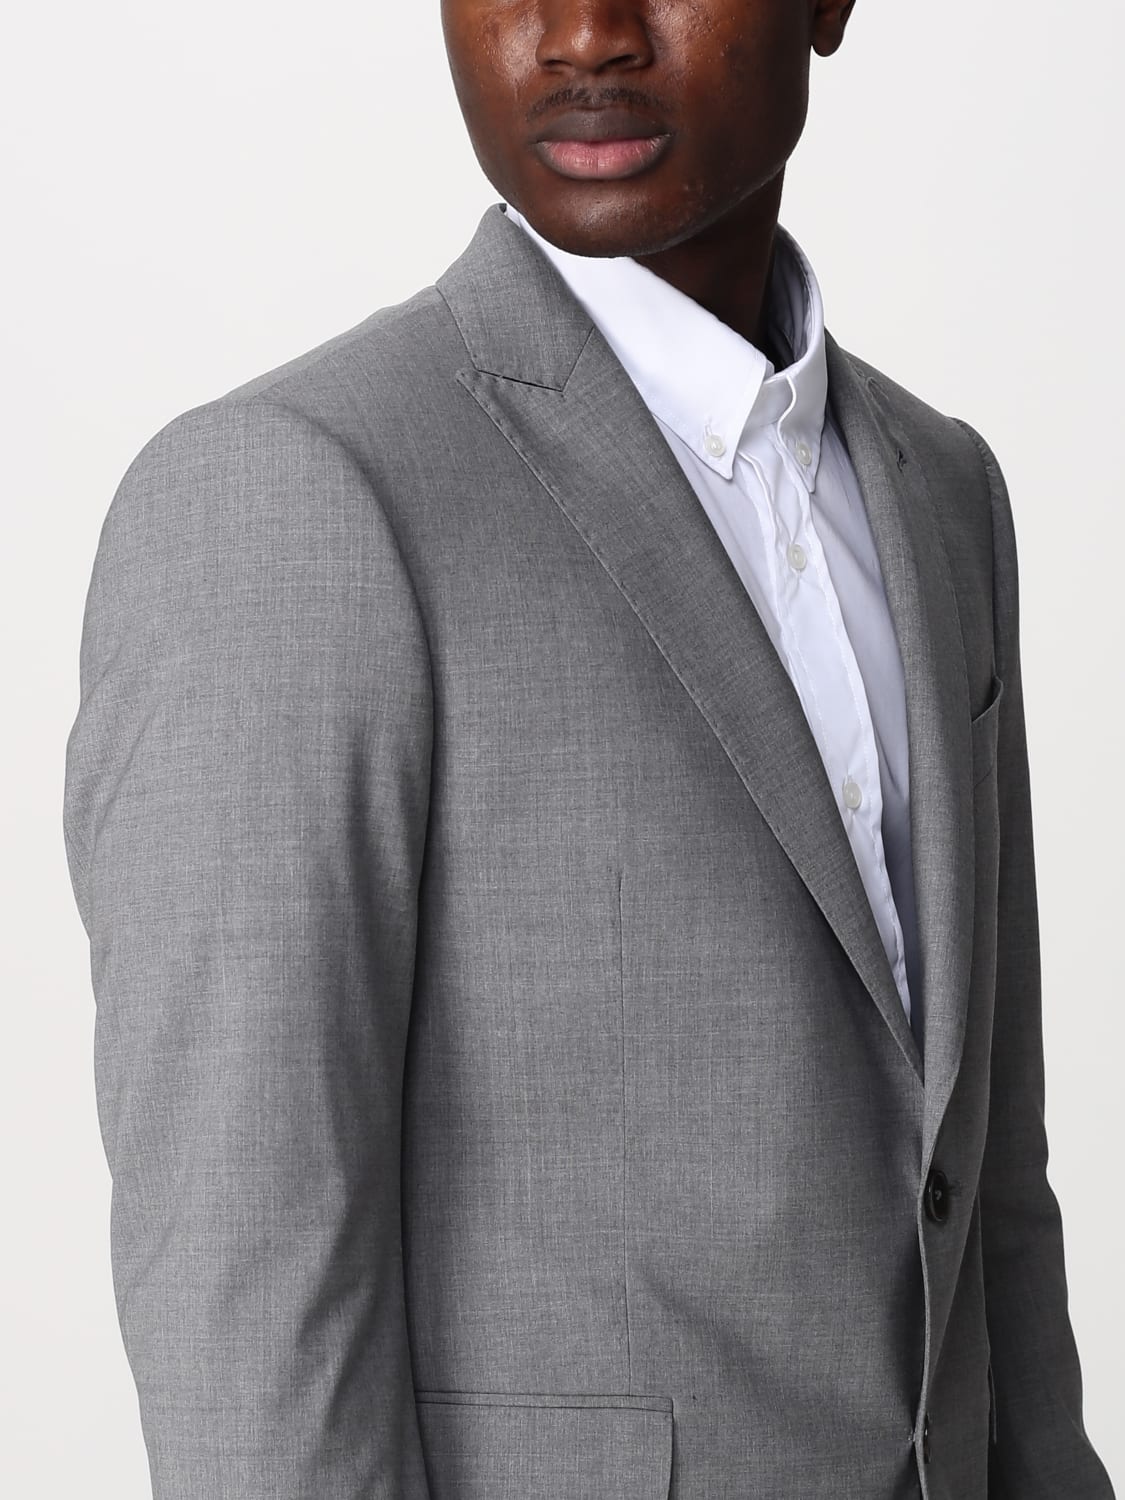 EMPORIO ARMANI: suit for man - Grey | Emporio Armani suit D41VMA01506 on GIGLIO.COM